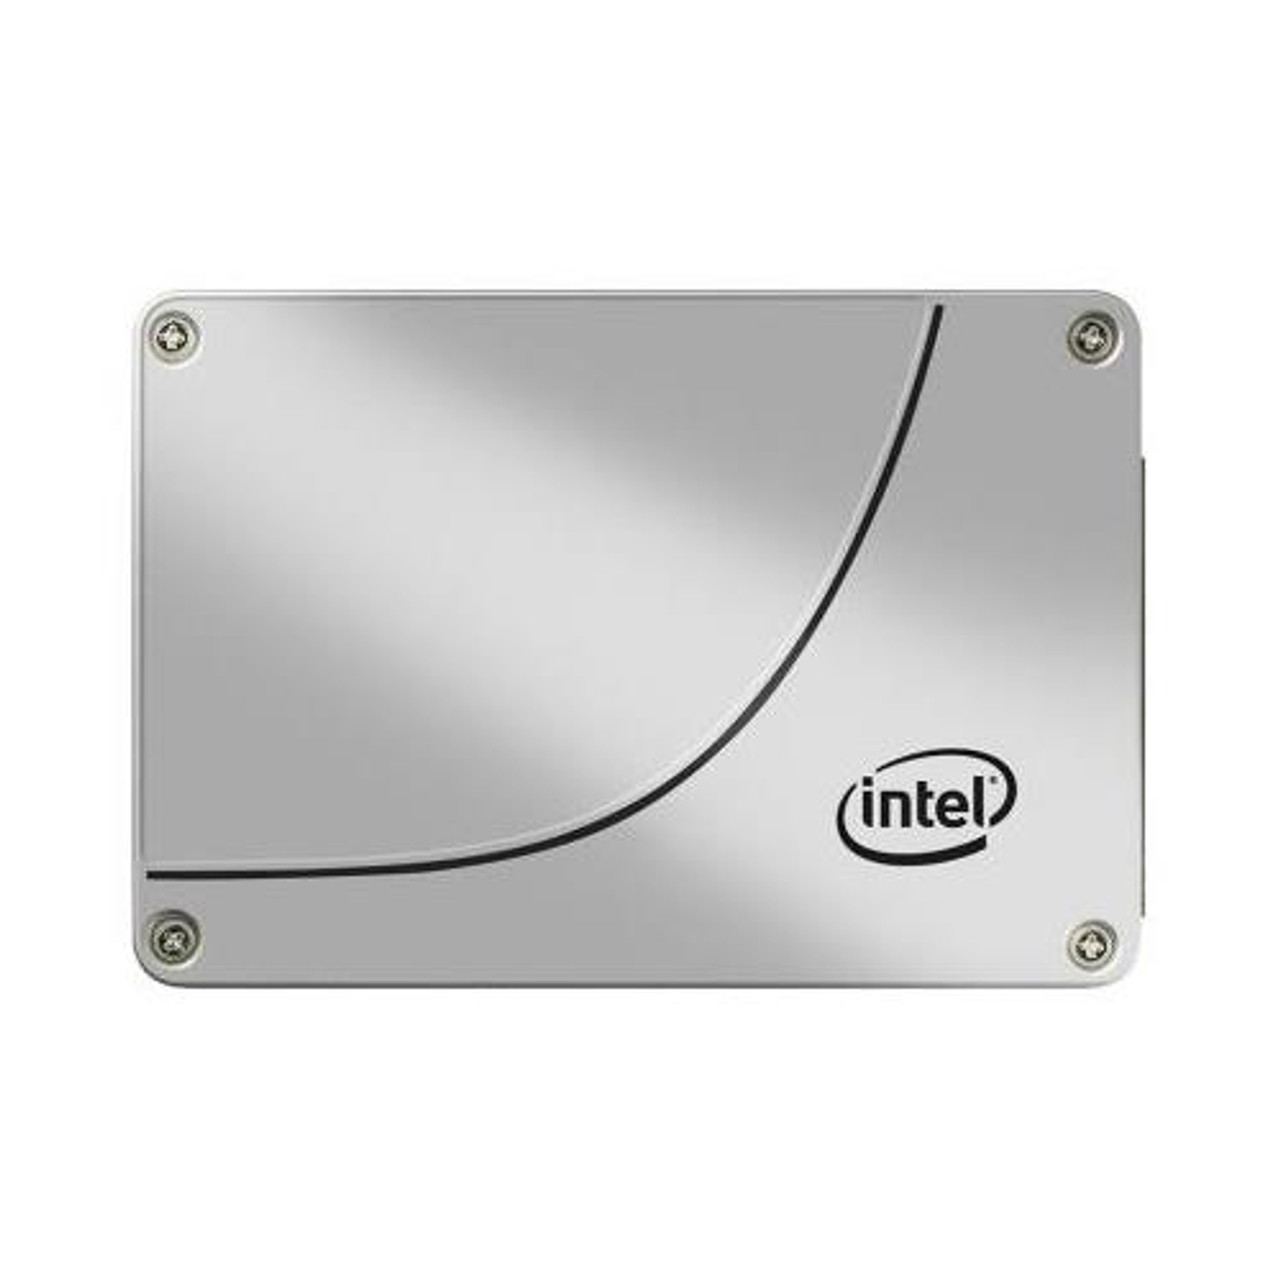 Buy Intel 711 Series SSDSA2SH032G2 SLC SATA 32GB Solid State Drive